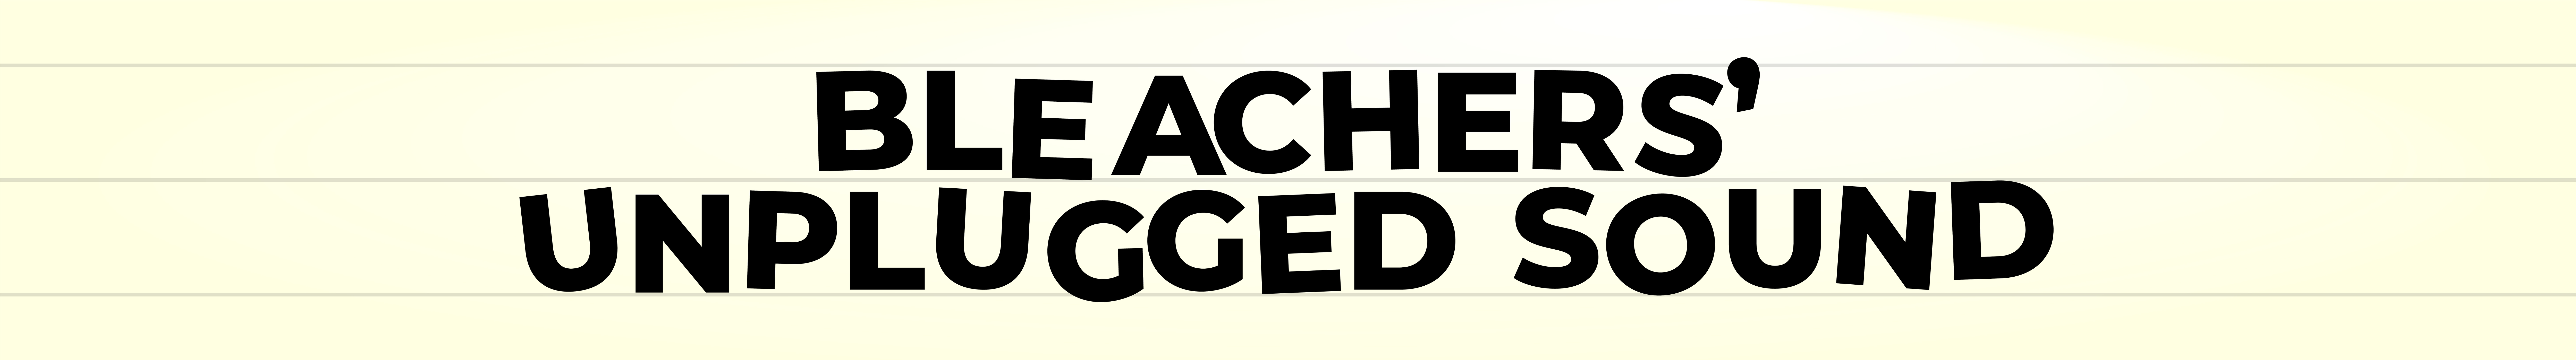 Bleachers' Unplugged Sound Graphic by Bobby Nicholas III